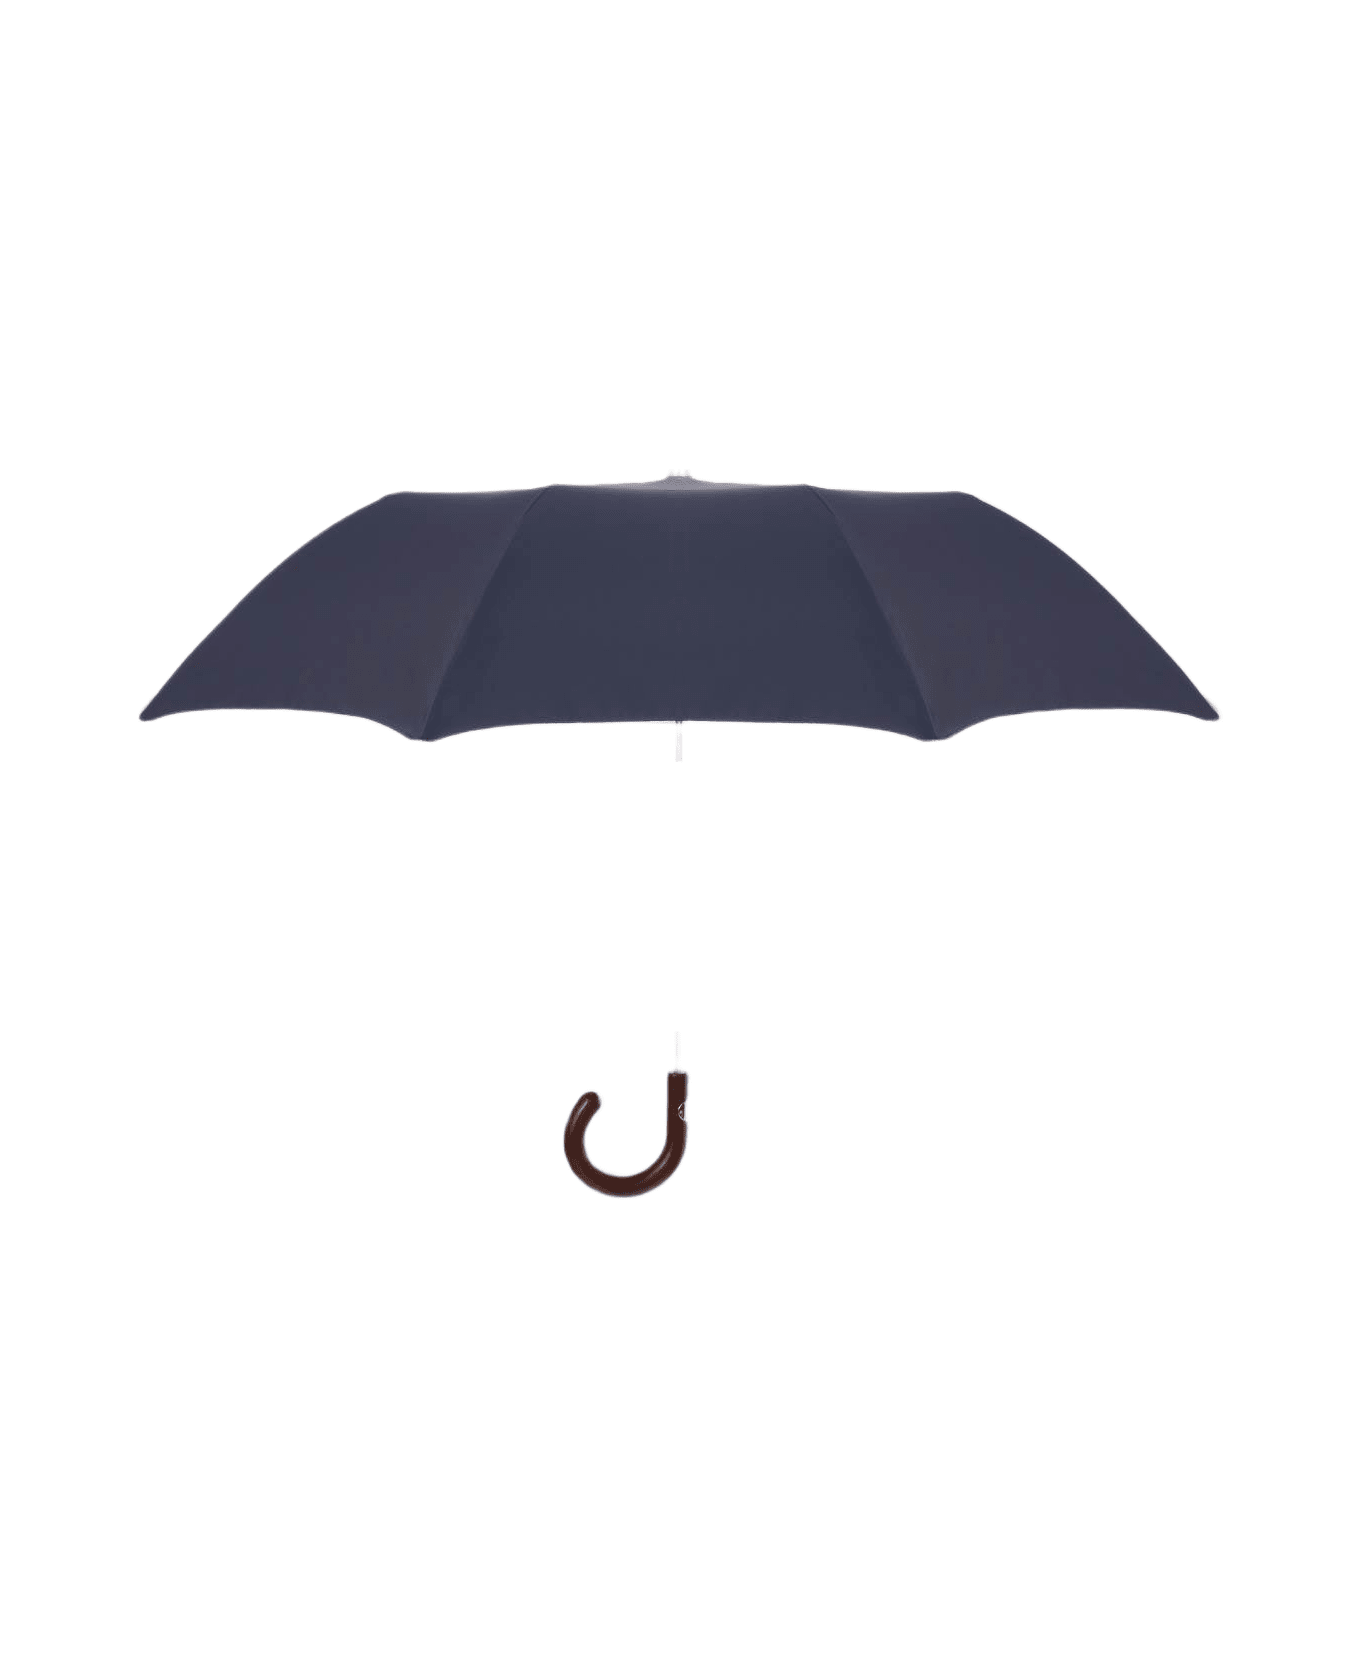 Larusmiani Folding Umbrella Umbrella - Navy